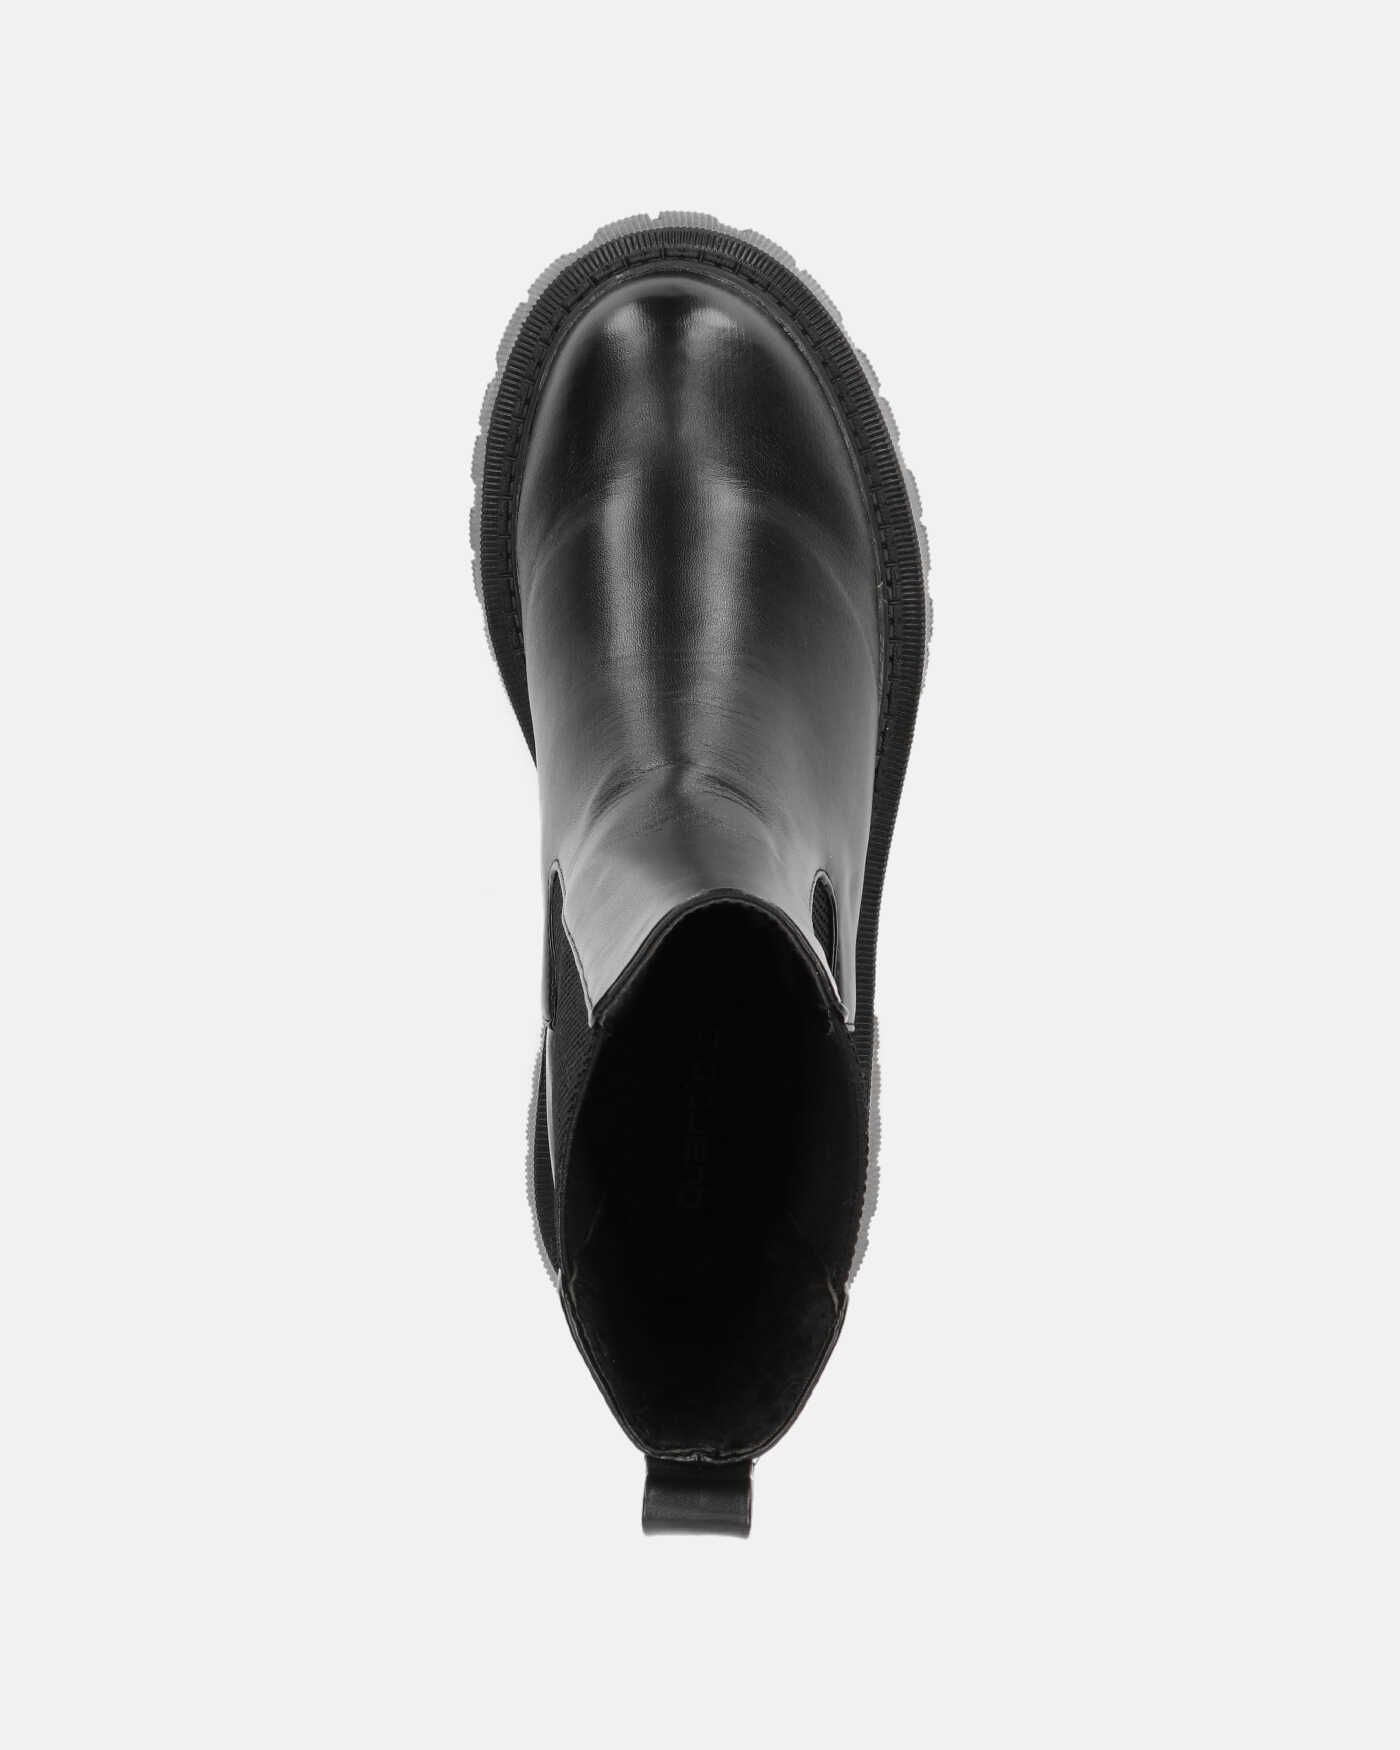 NEREA - botín de piel sintética negra con banda elástica